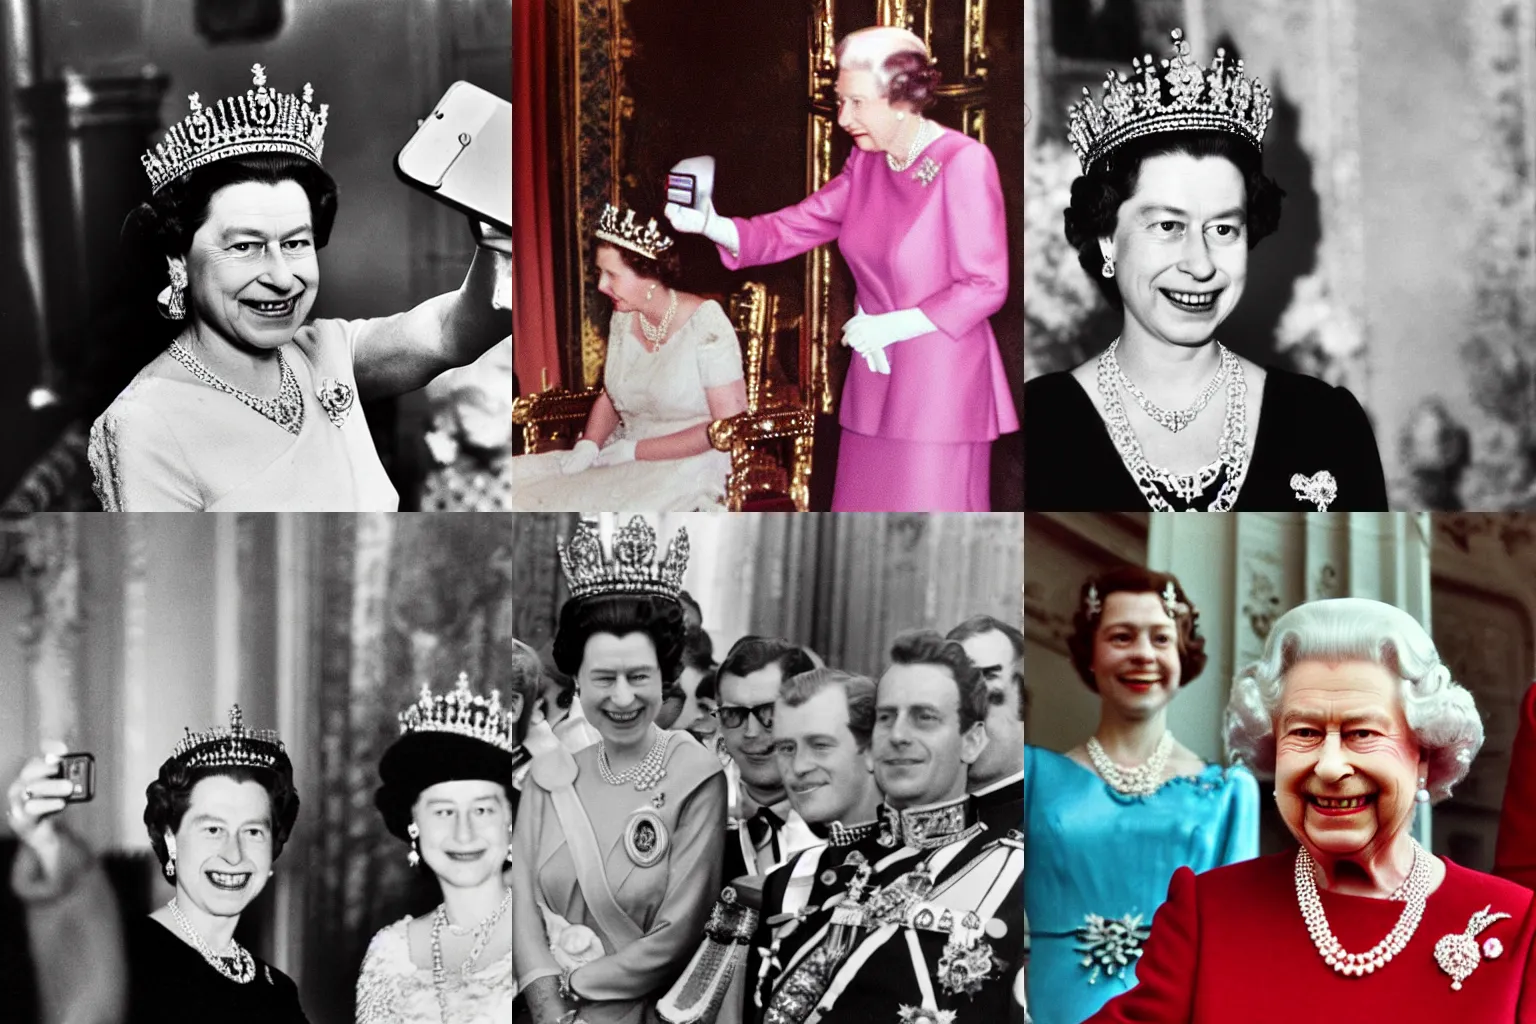 Prompt: A selfie taken by queen Elizabeth II during her coronation